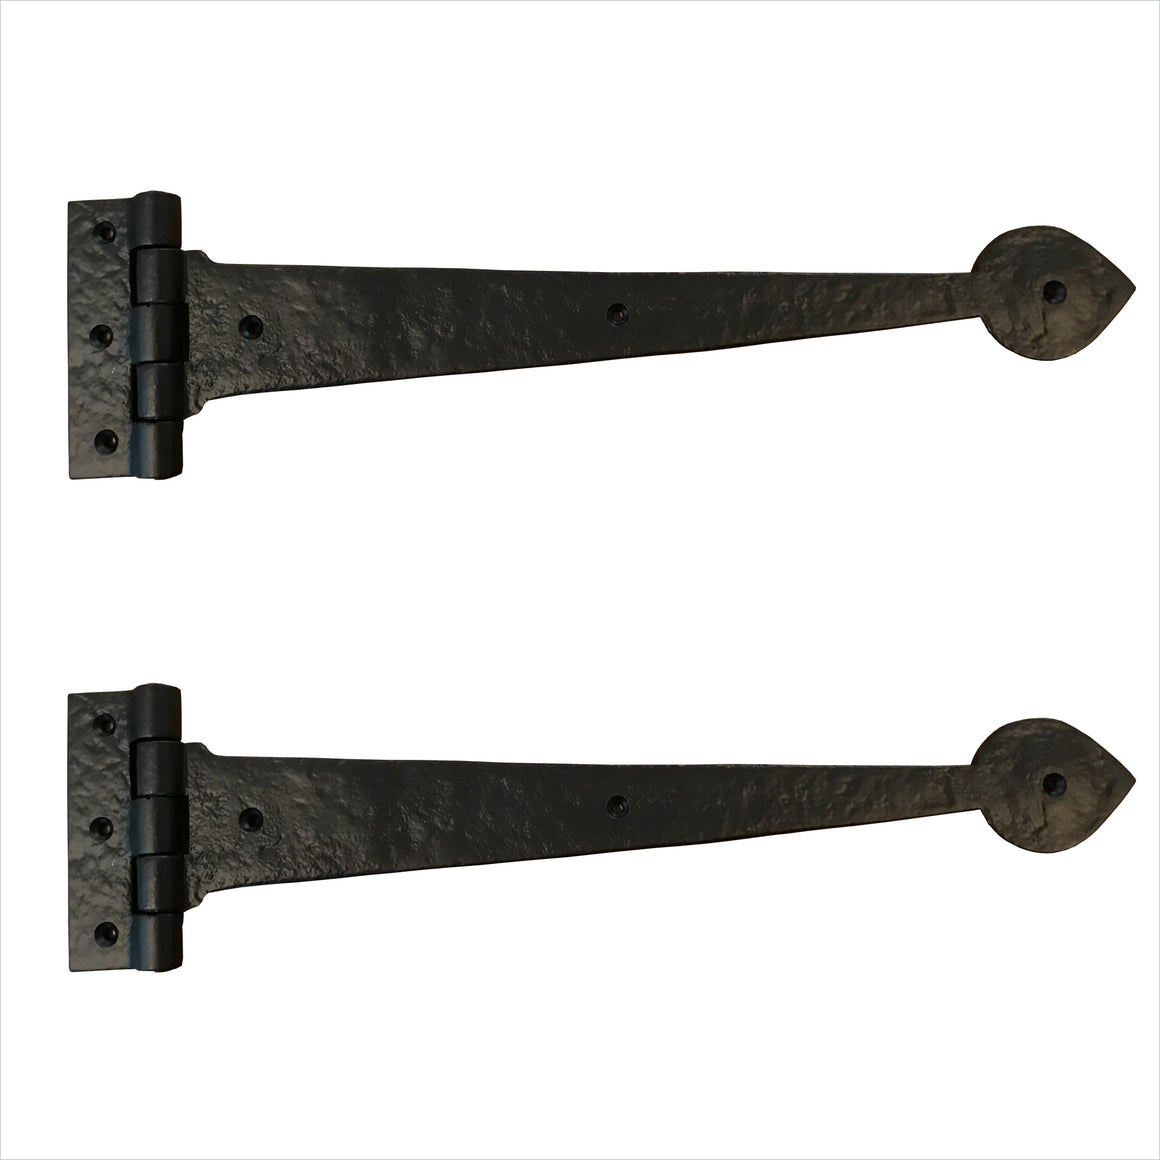 Spear strap hinge - 15.25"